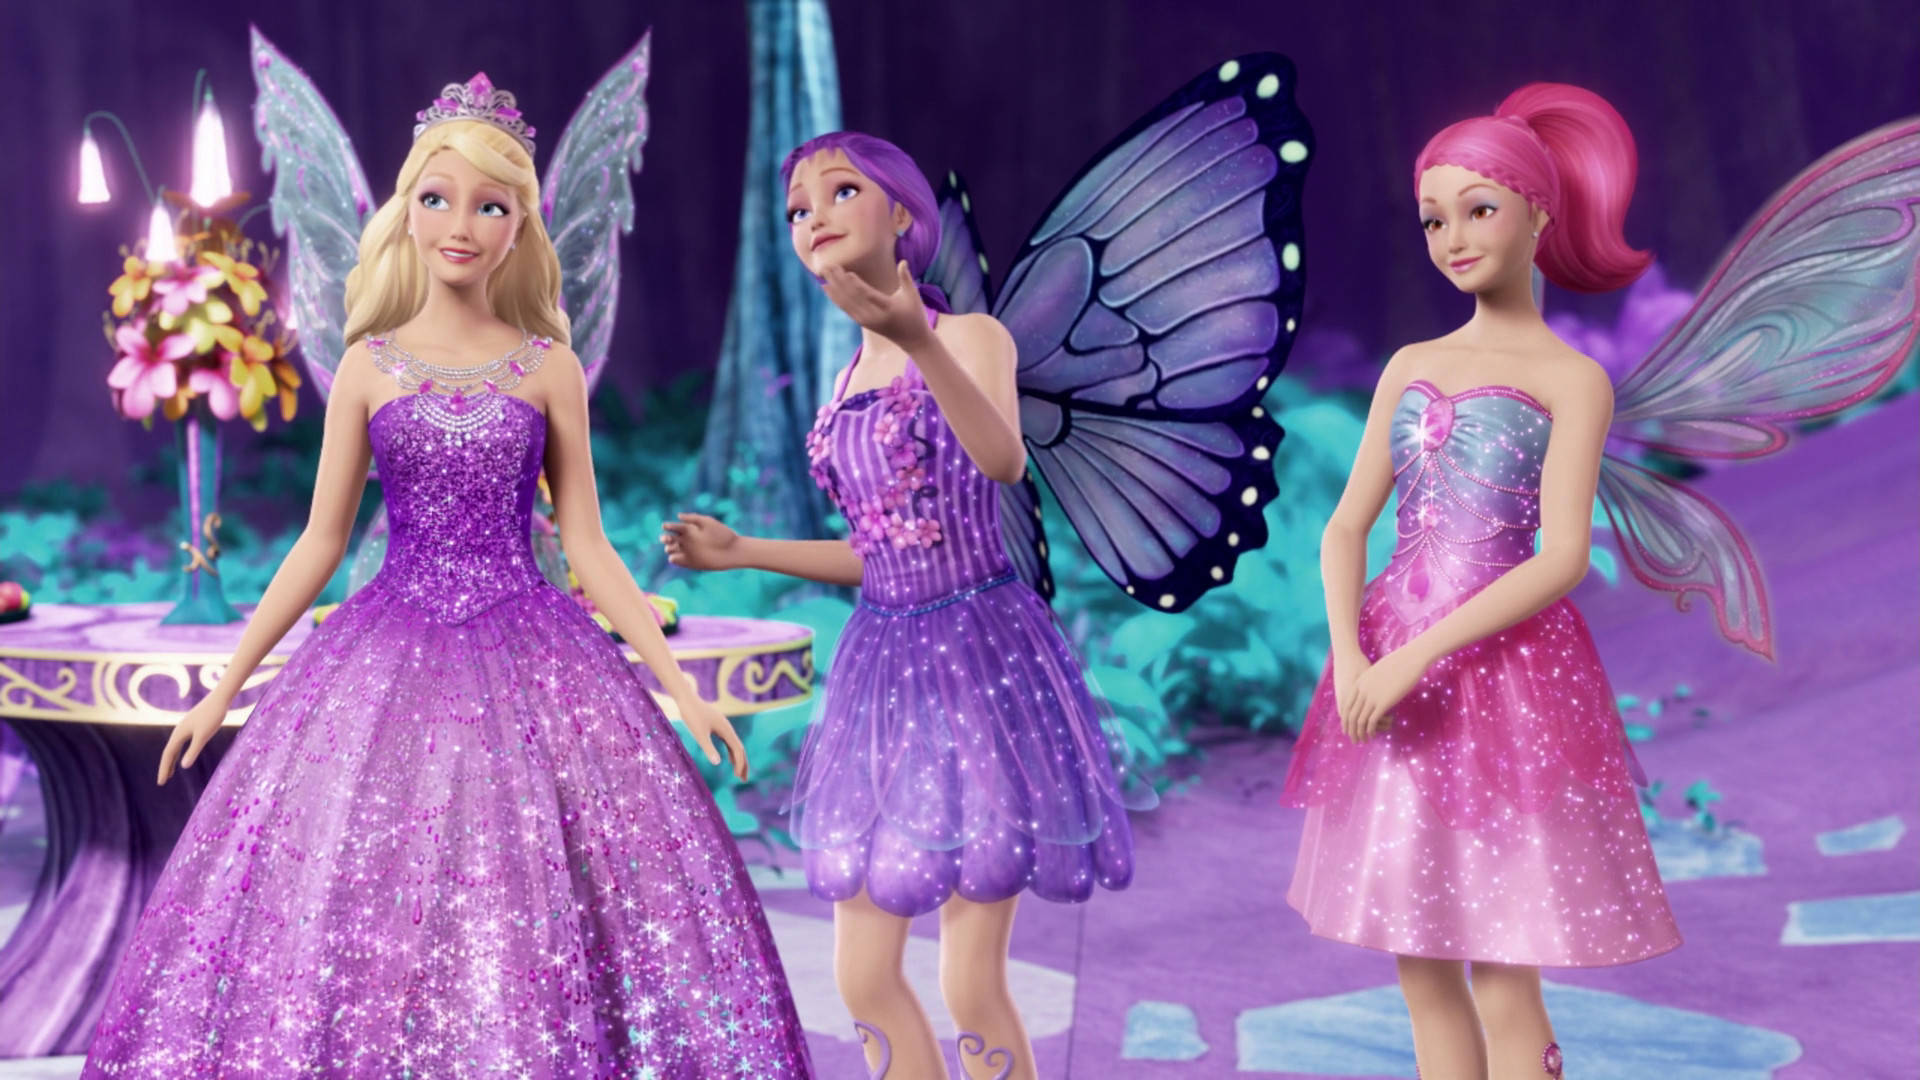 Barbie Mariposa - Barbie:Mariposa Wallpaper (32785950) - Fanpop